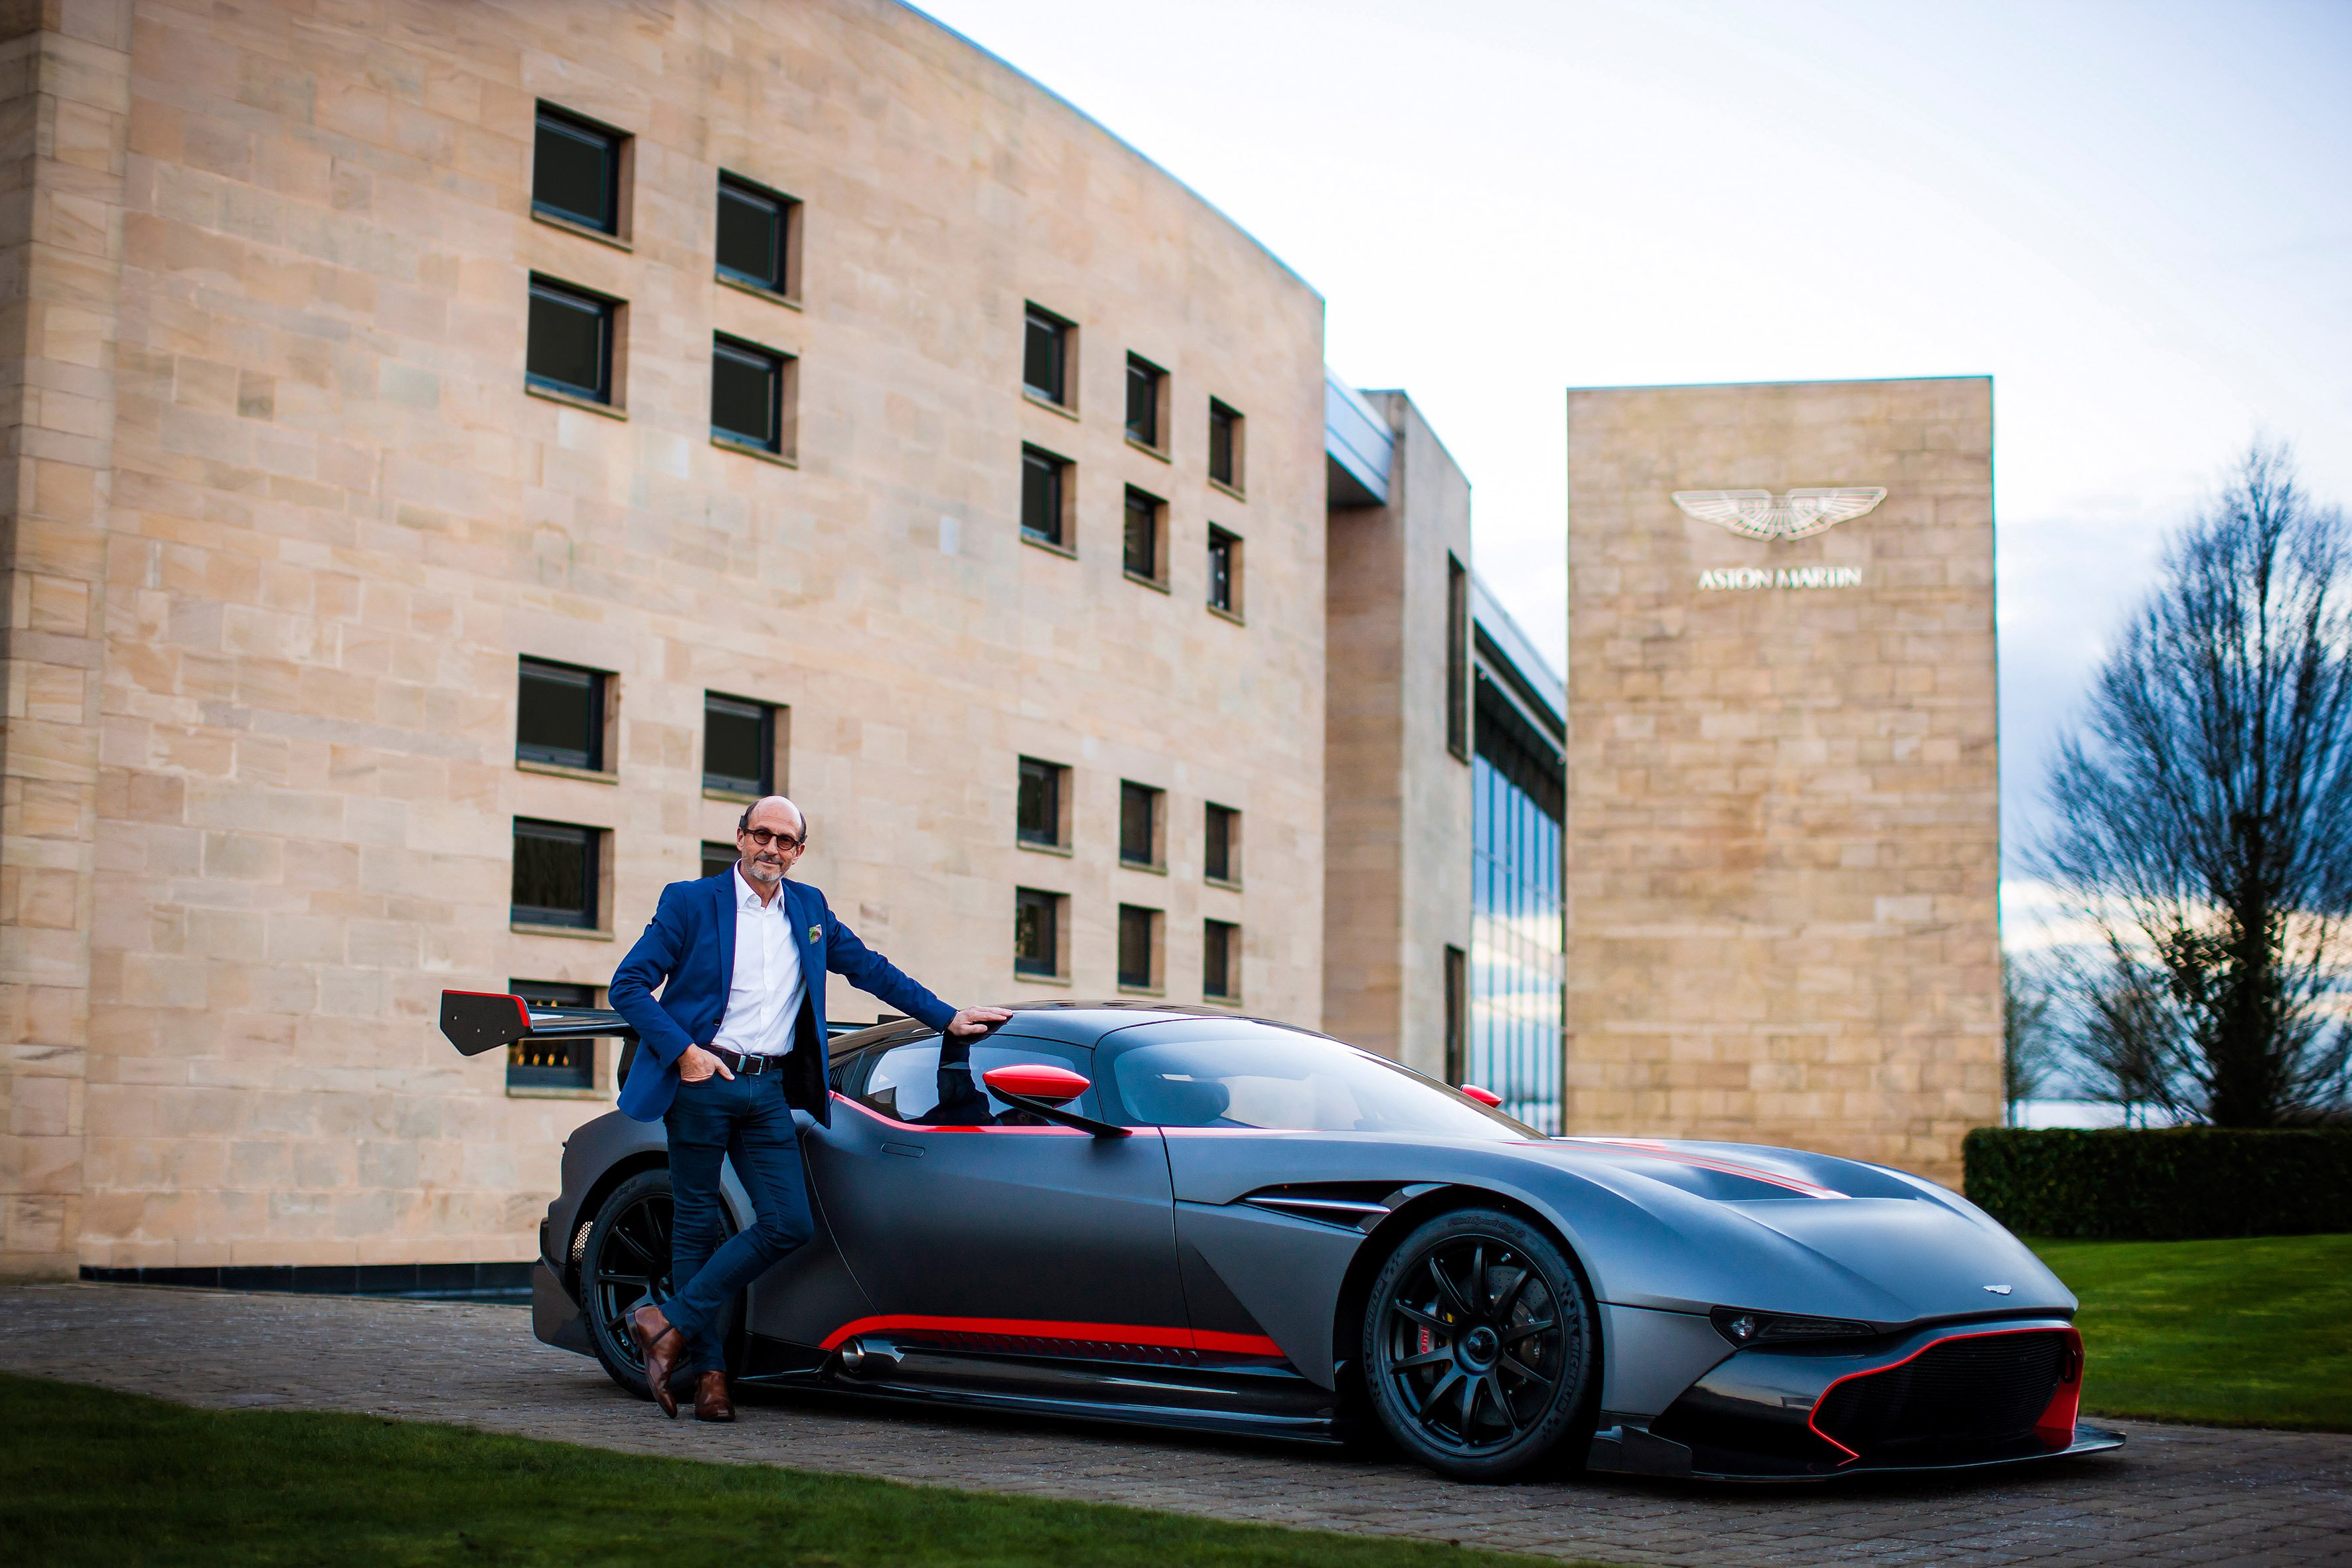 Richard Mille Visit to Aston Martin. 